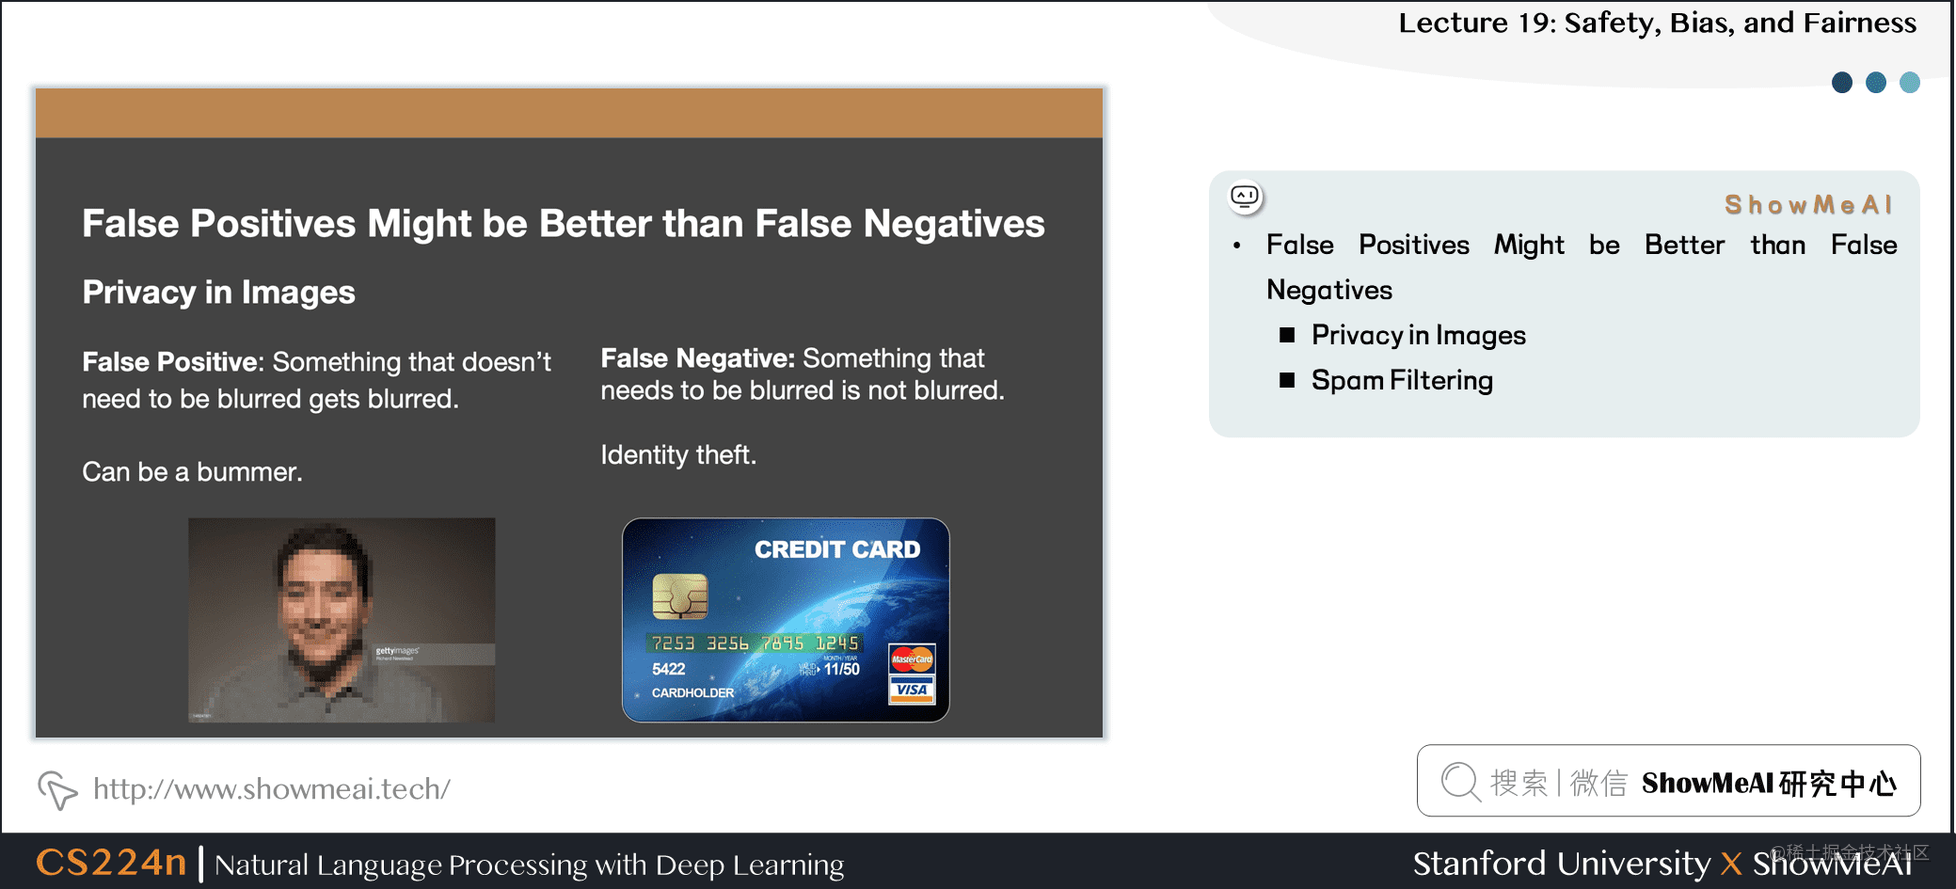 False Positives Might be Better than False Negatives